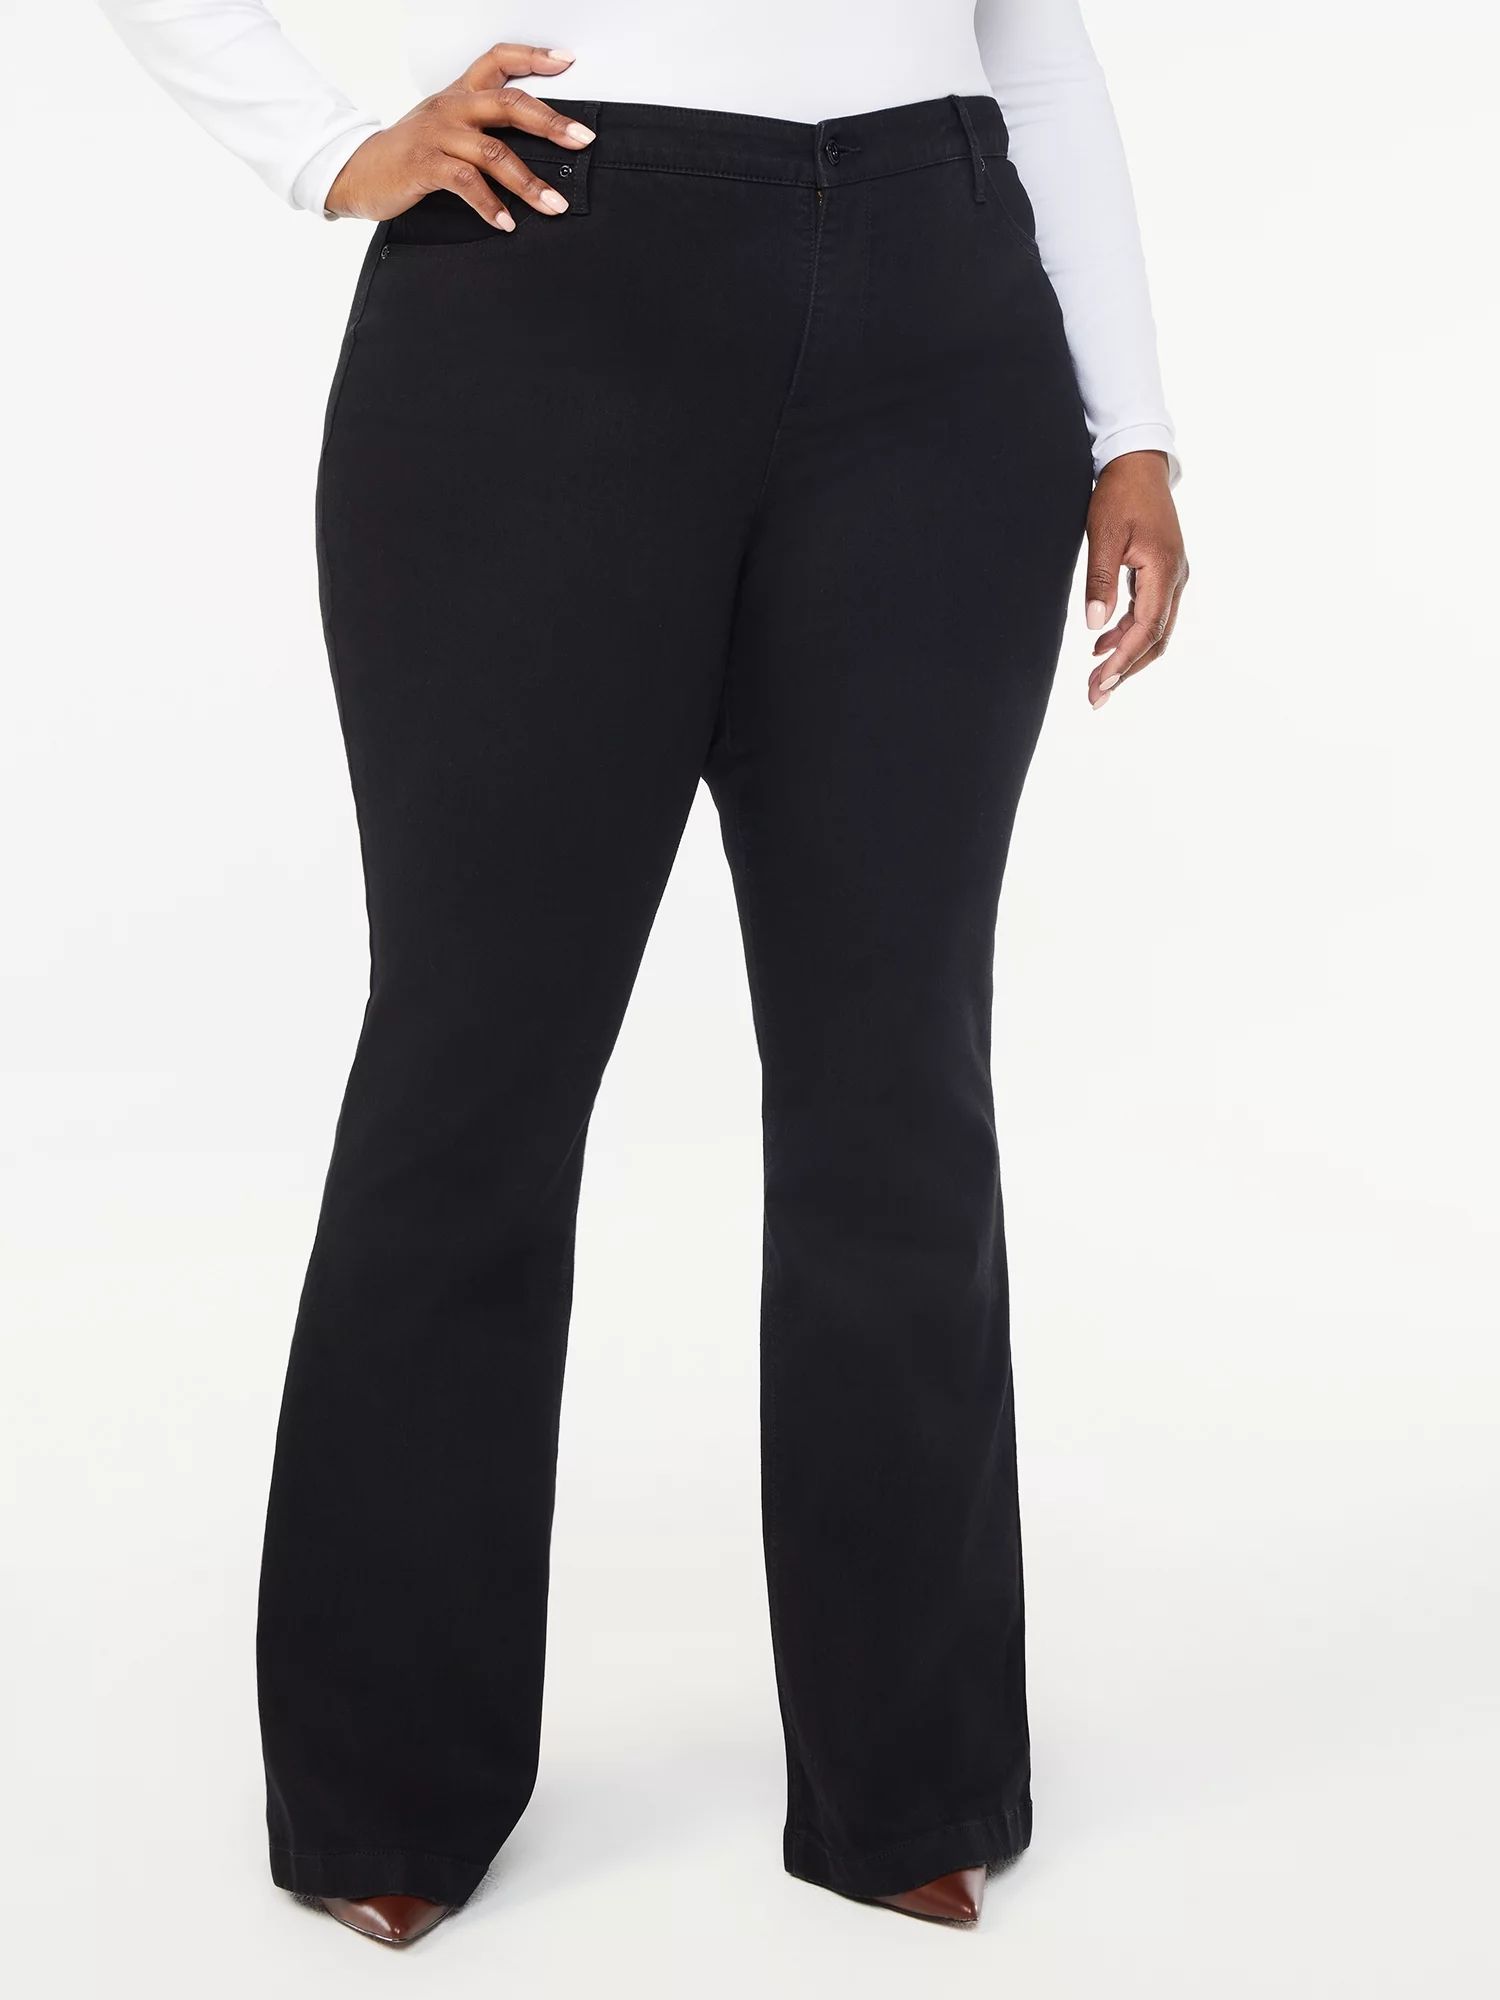 Sofia Jeans by Sofia Vergara Women's Plus Size High Rise Zip Fly Flare Jeans | Walmart (US)